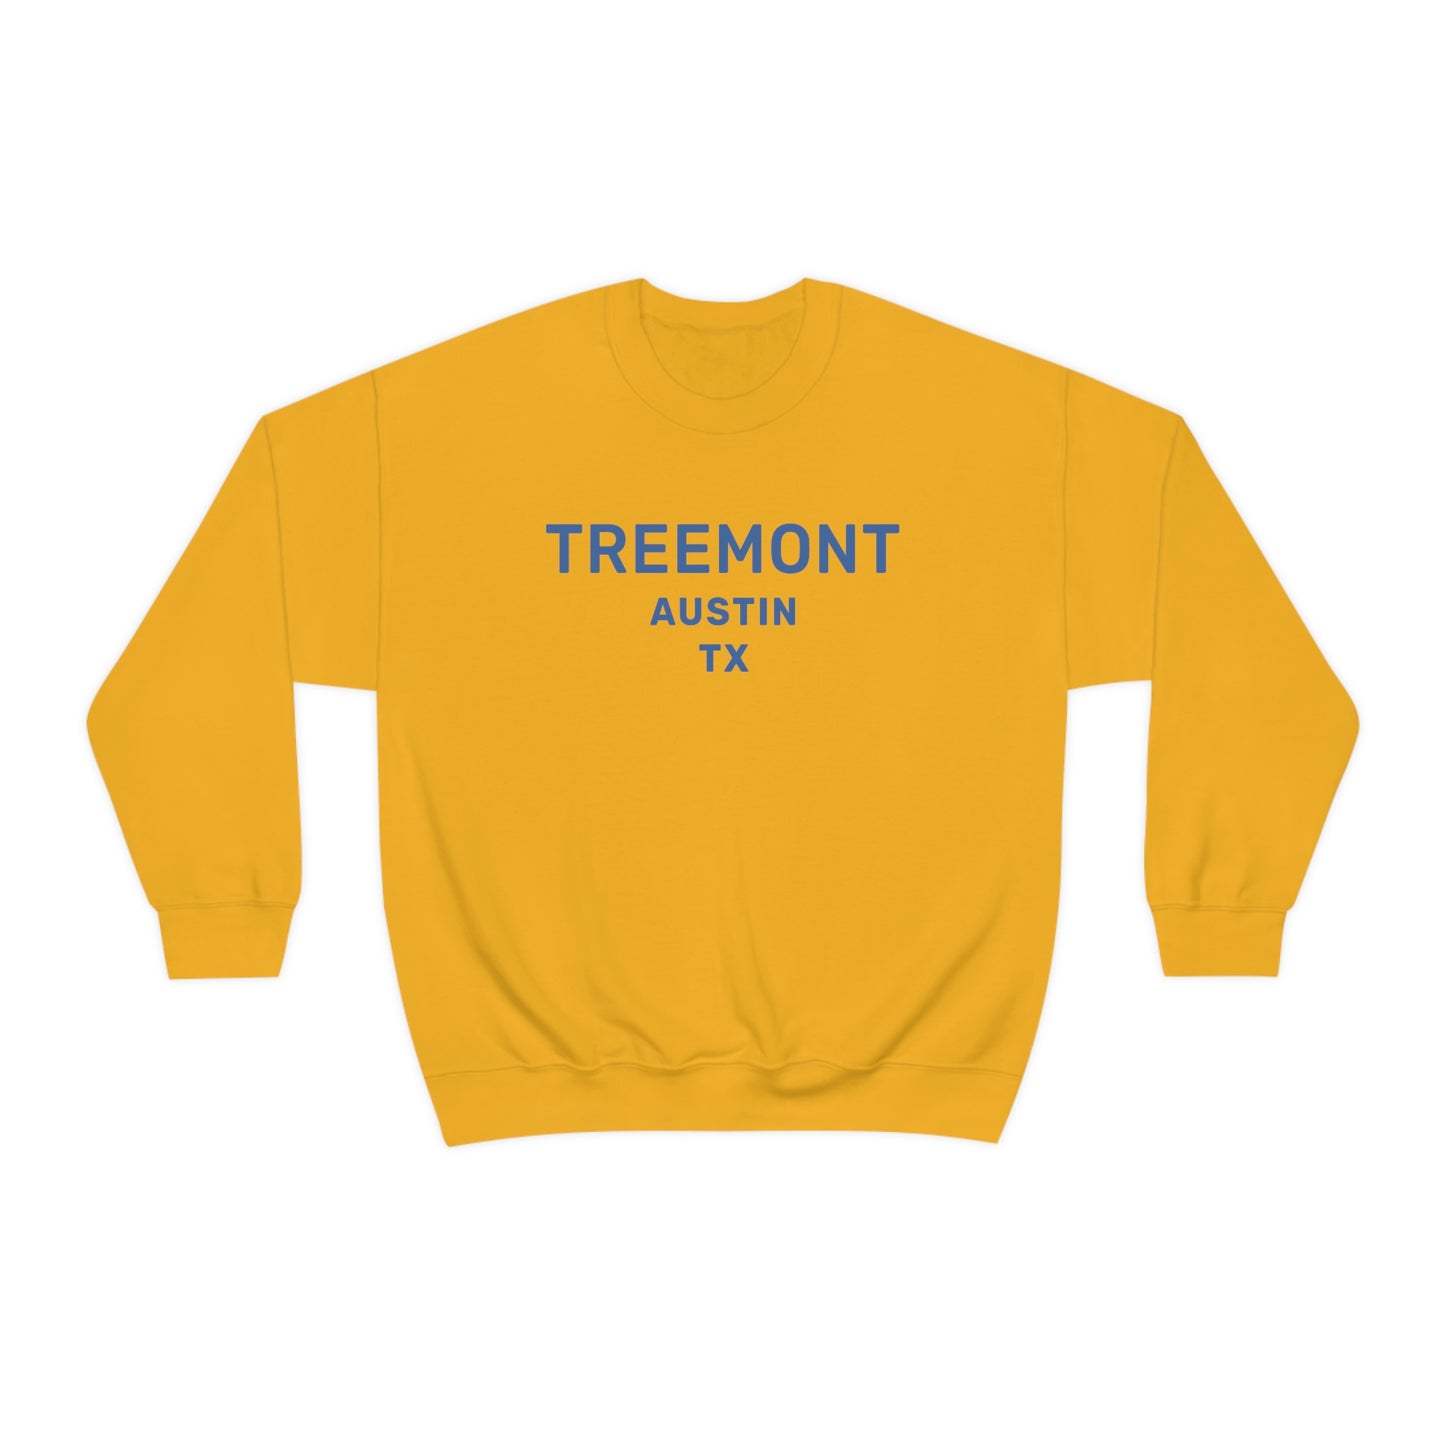 Treemont Sweatshirt: "Everyday"